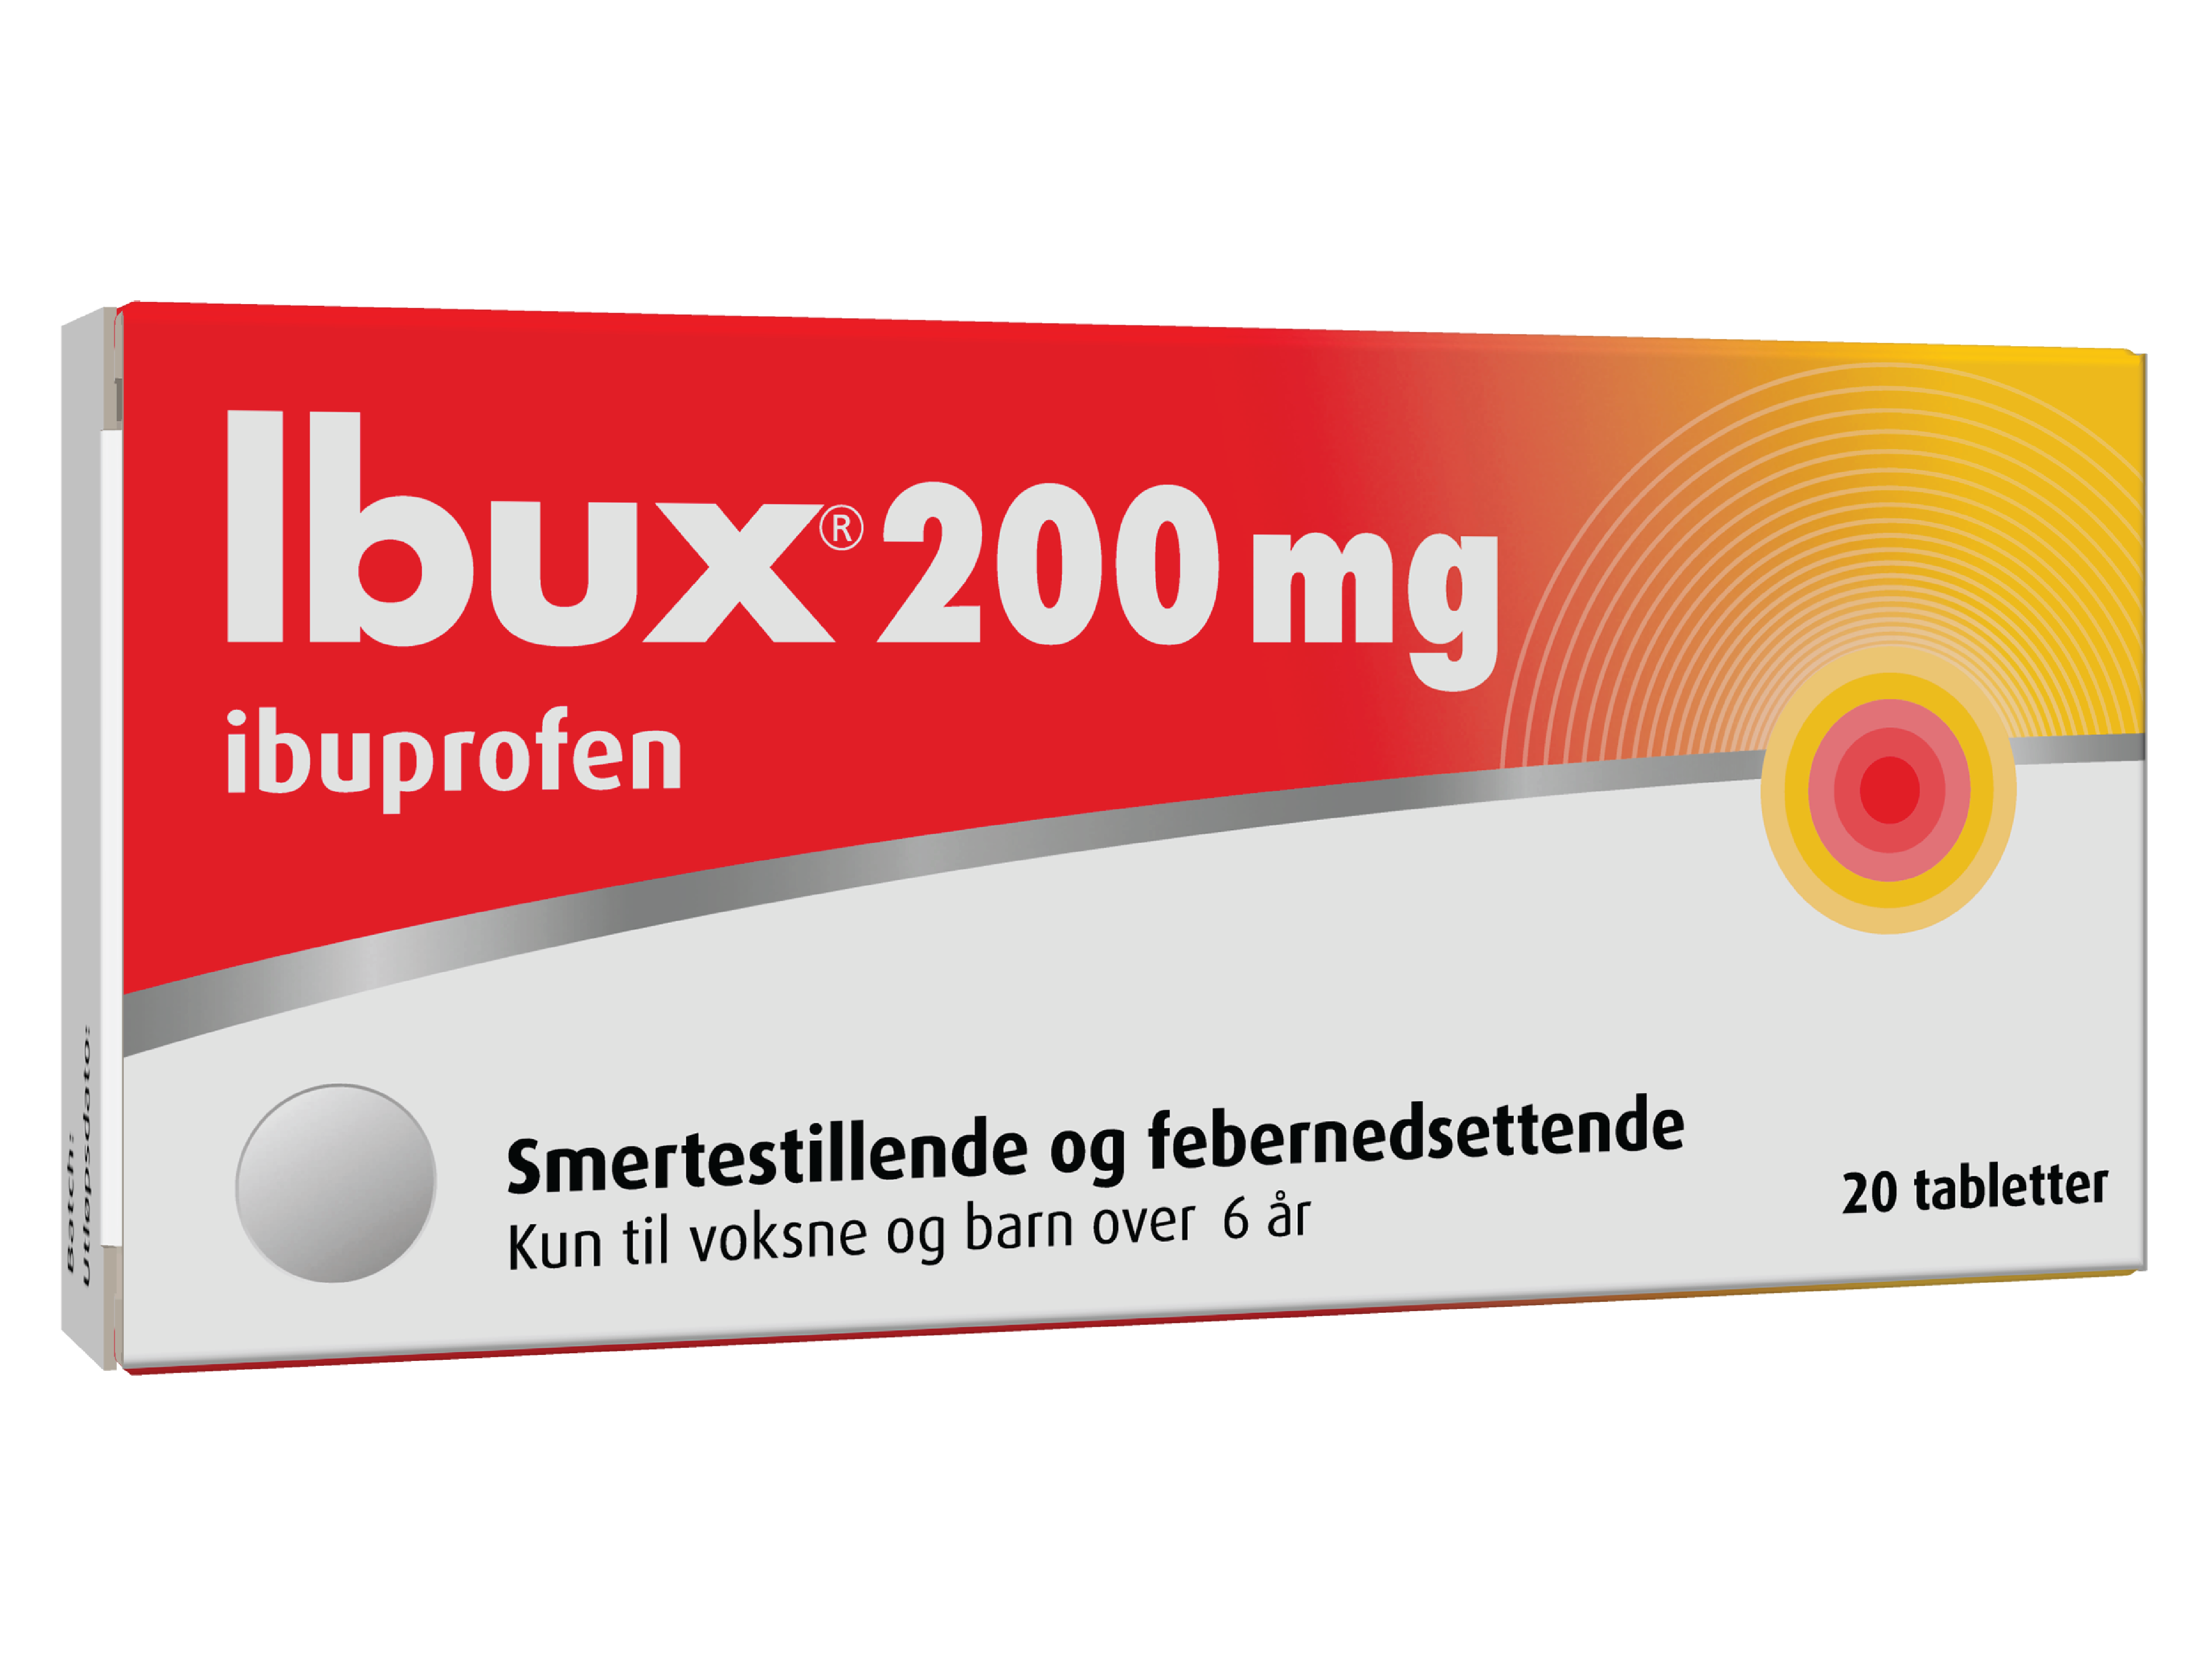 Ibux Tabletter 200 mg, 20 stk. på brett